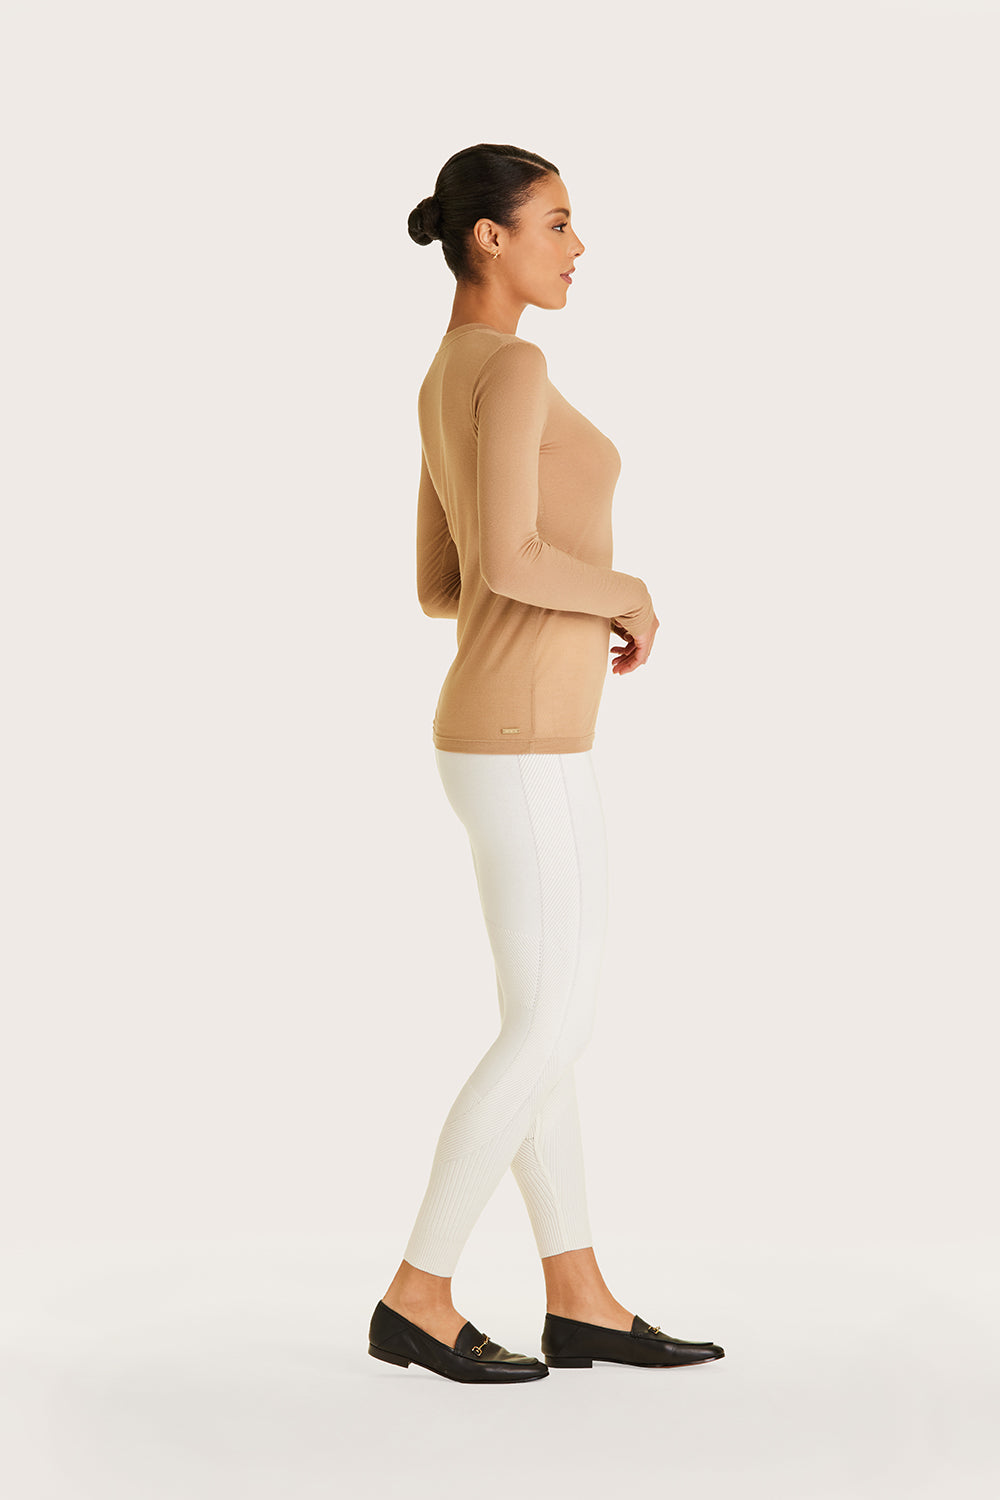 Alala women's cashmere crewneck long sleeve top in beige